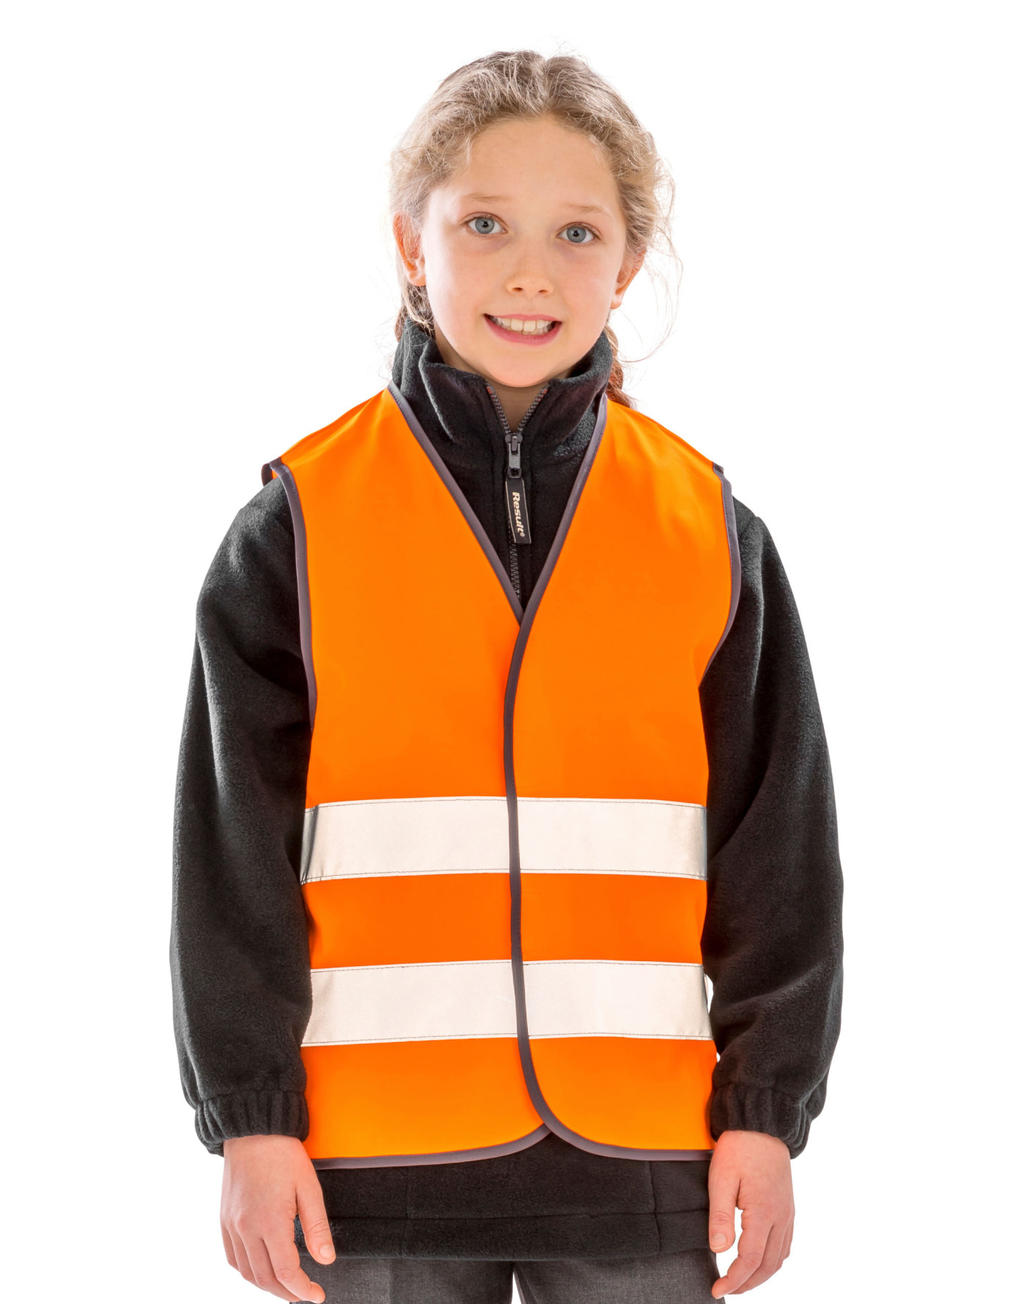  Junior Hi-Vis Safety Vest in Farbe Fluorescent Orange